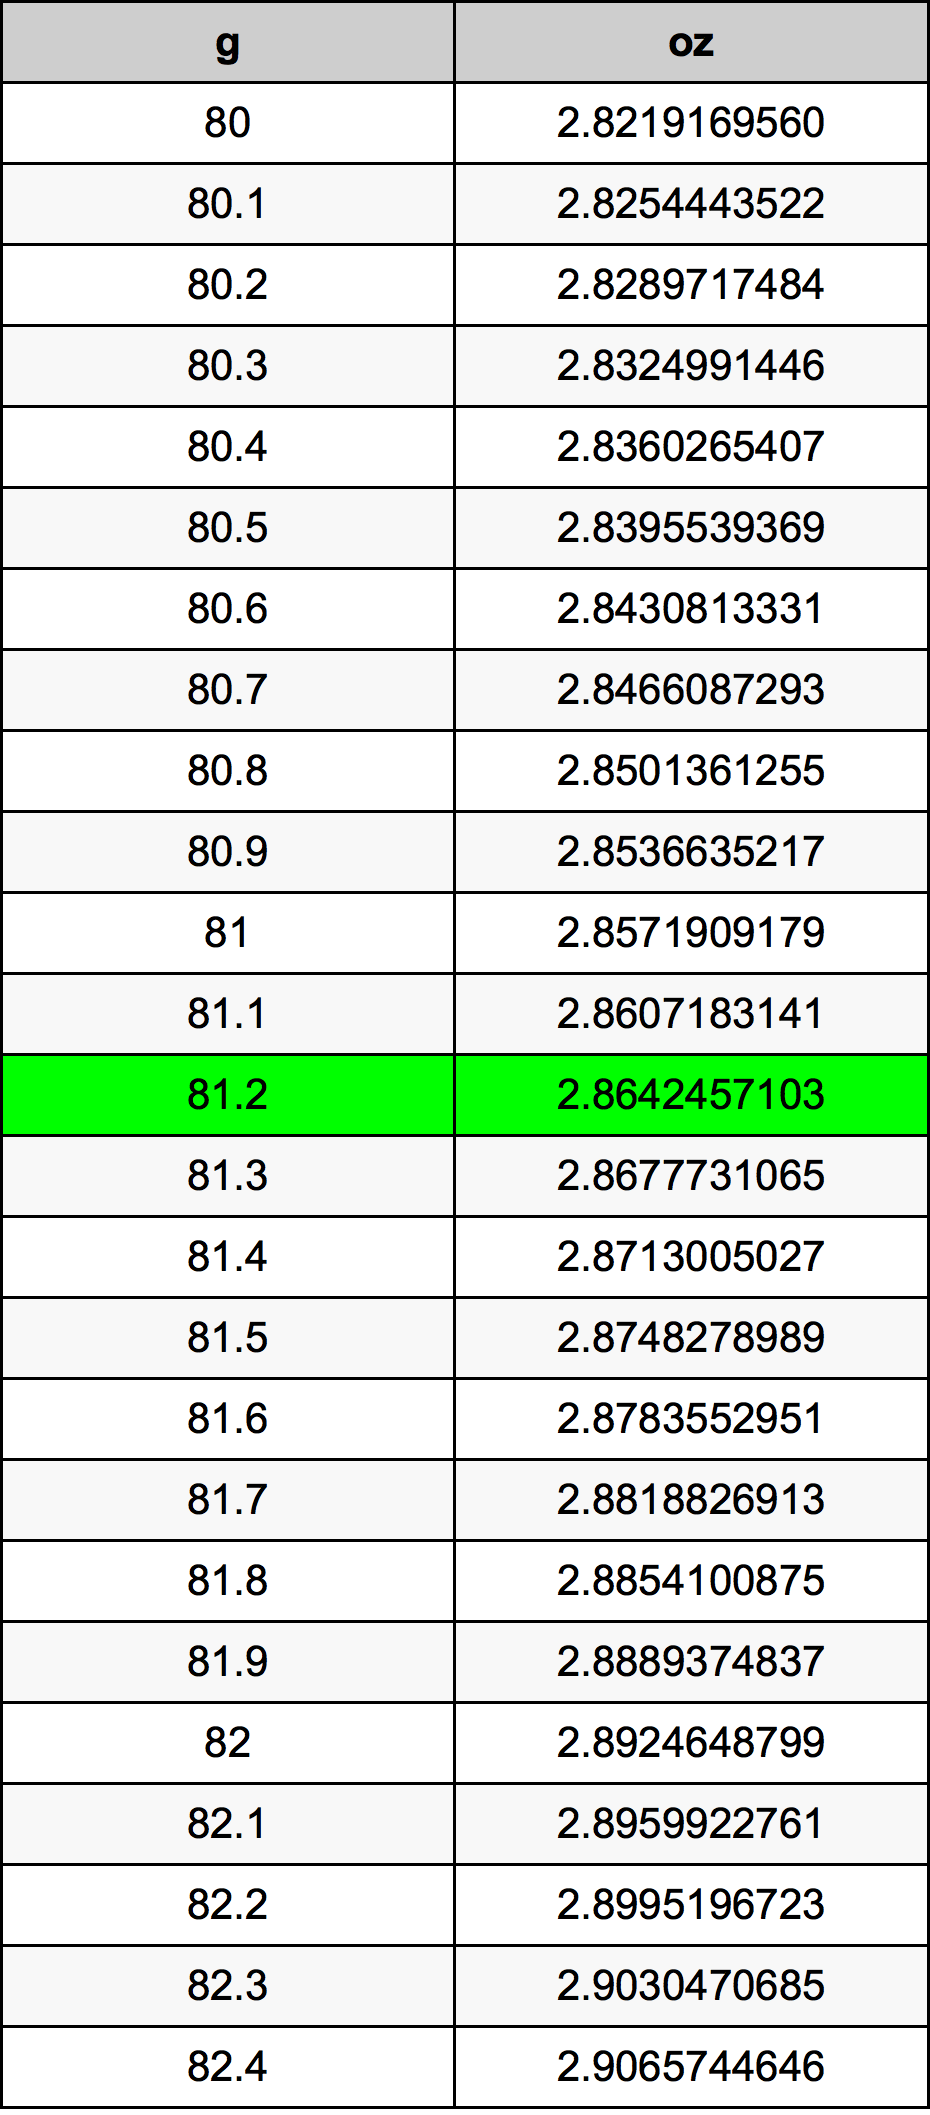 81.2 غرام جدول تحويل